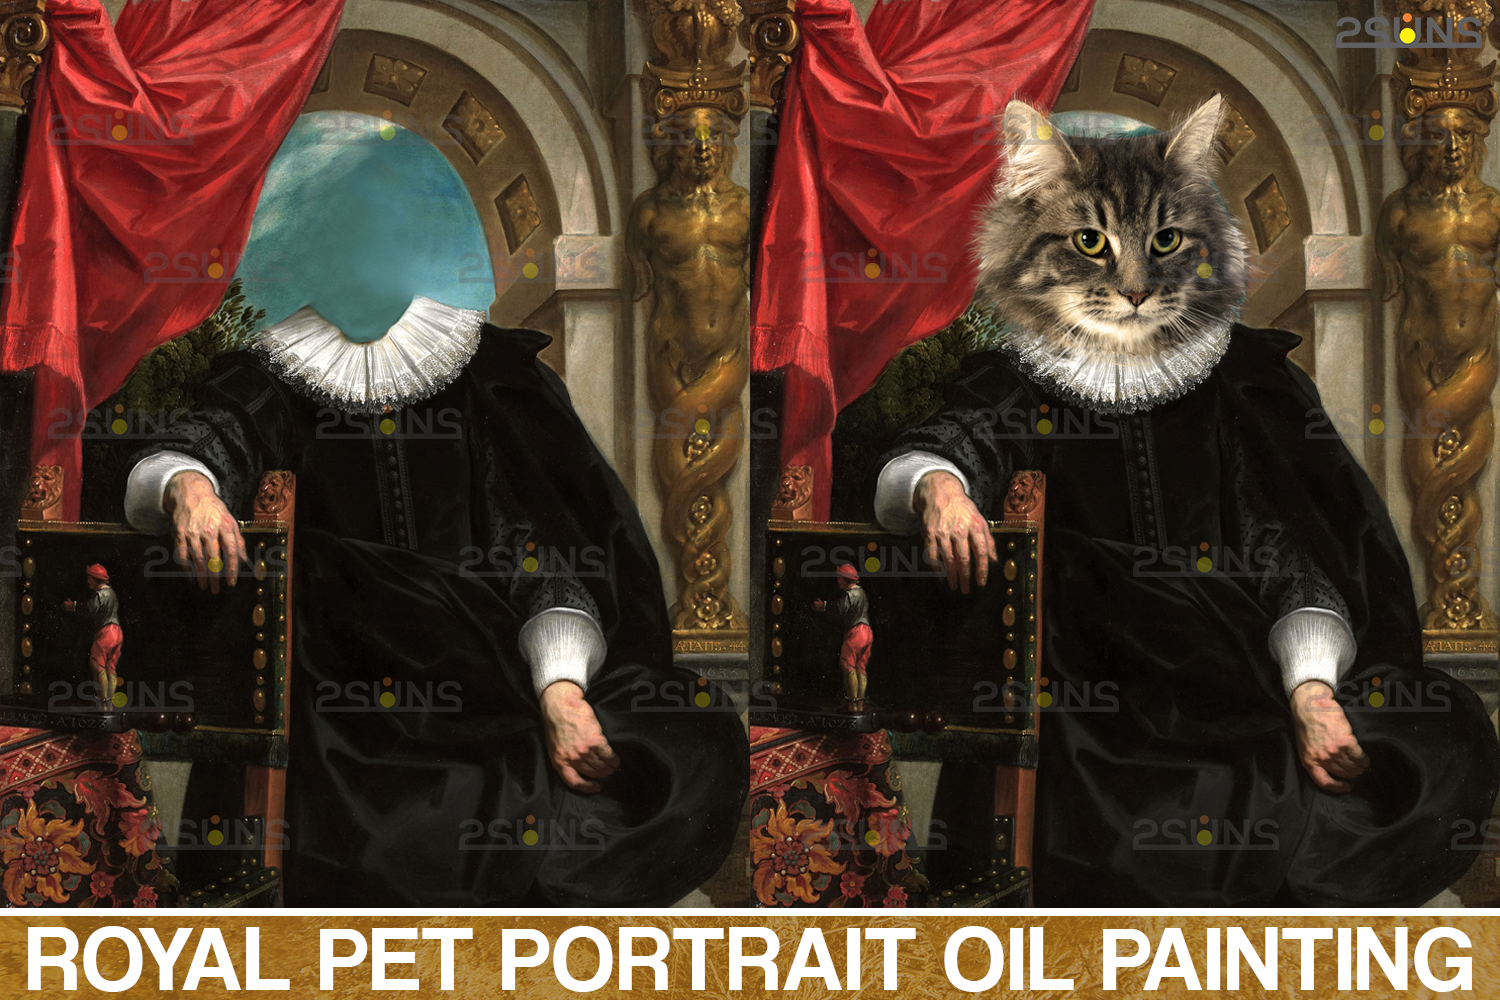 royal-pet-portrait-templates-vol-7-pet-painting-by-2suns-thehungryjpeg